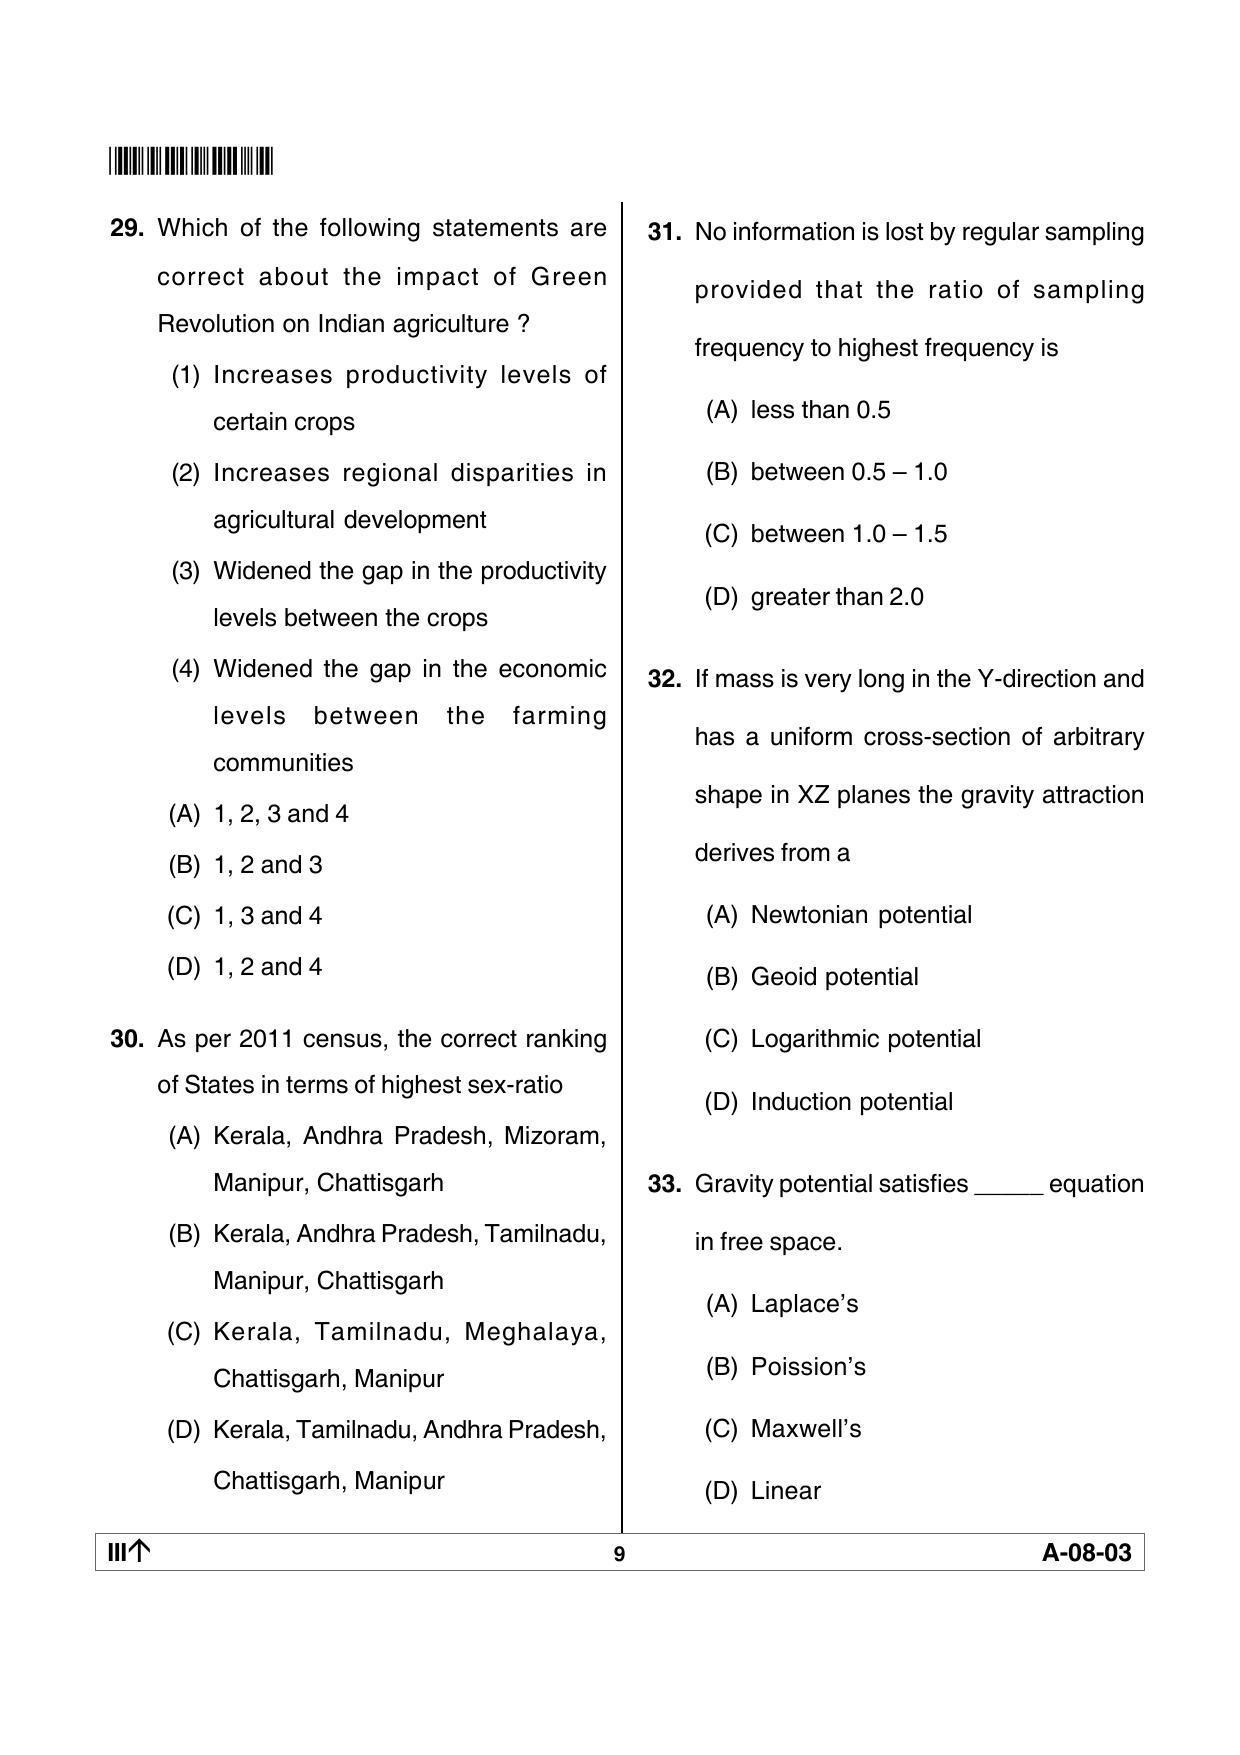 LUVAS Clerk Model Papers - Environment.pdf - Page 4